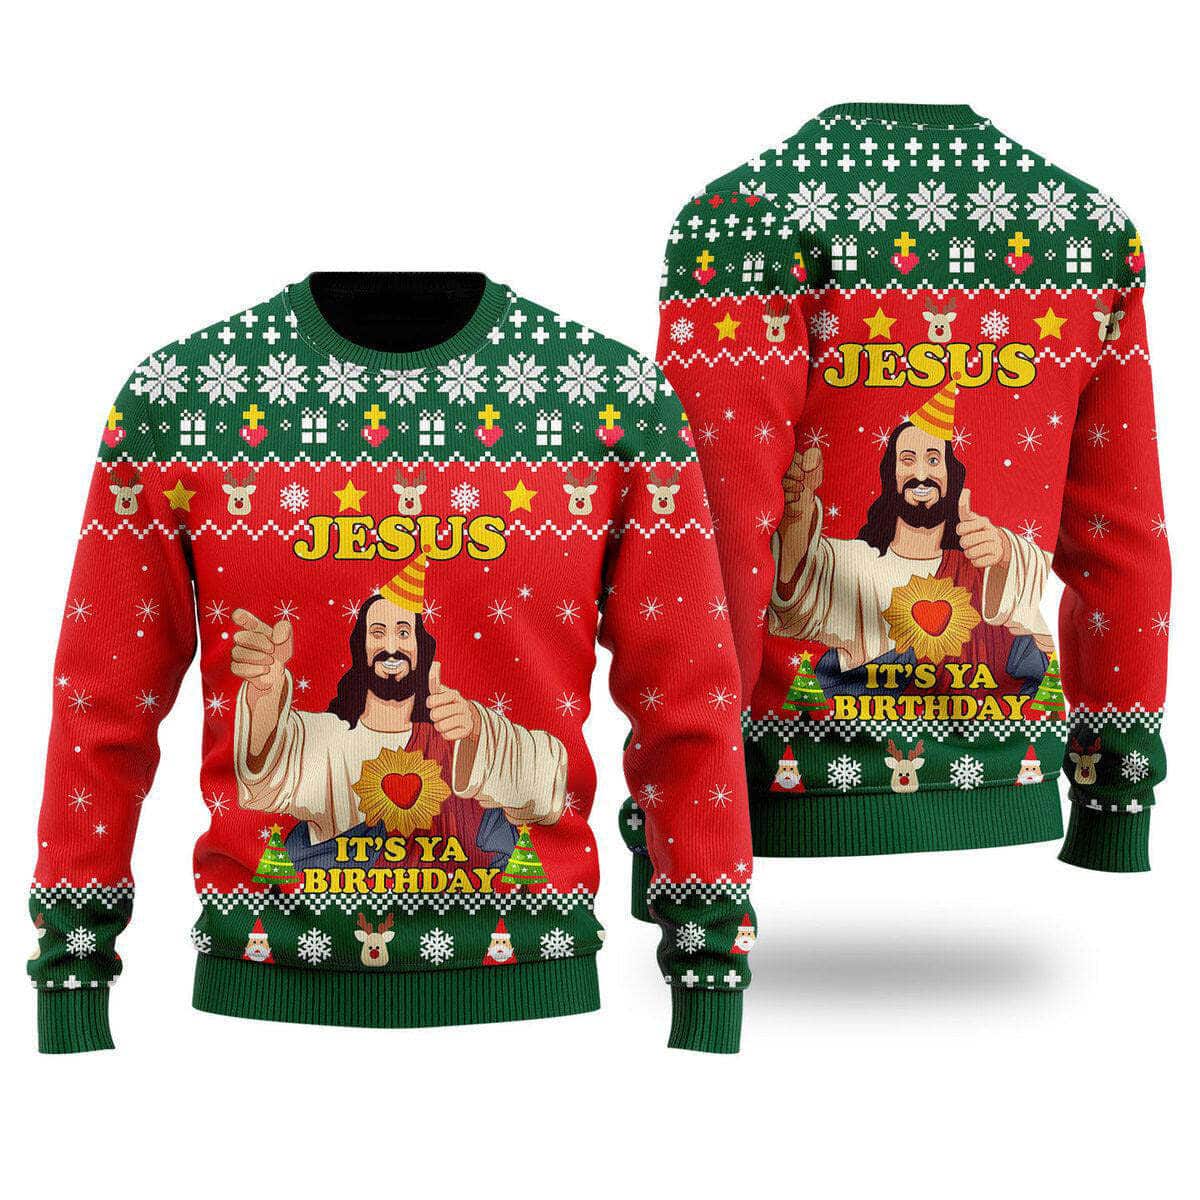 Jesus It's Ya Birthday Ugly Christmas Ugly Christmas Sweater Christian Religious Gift